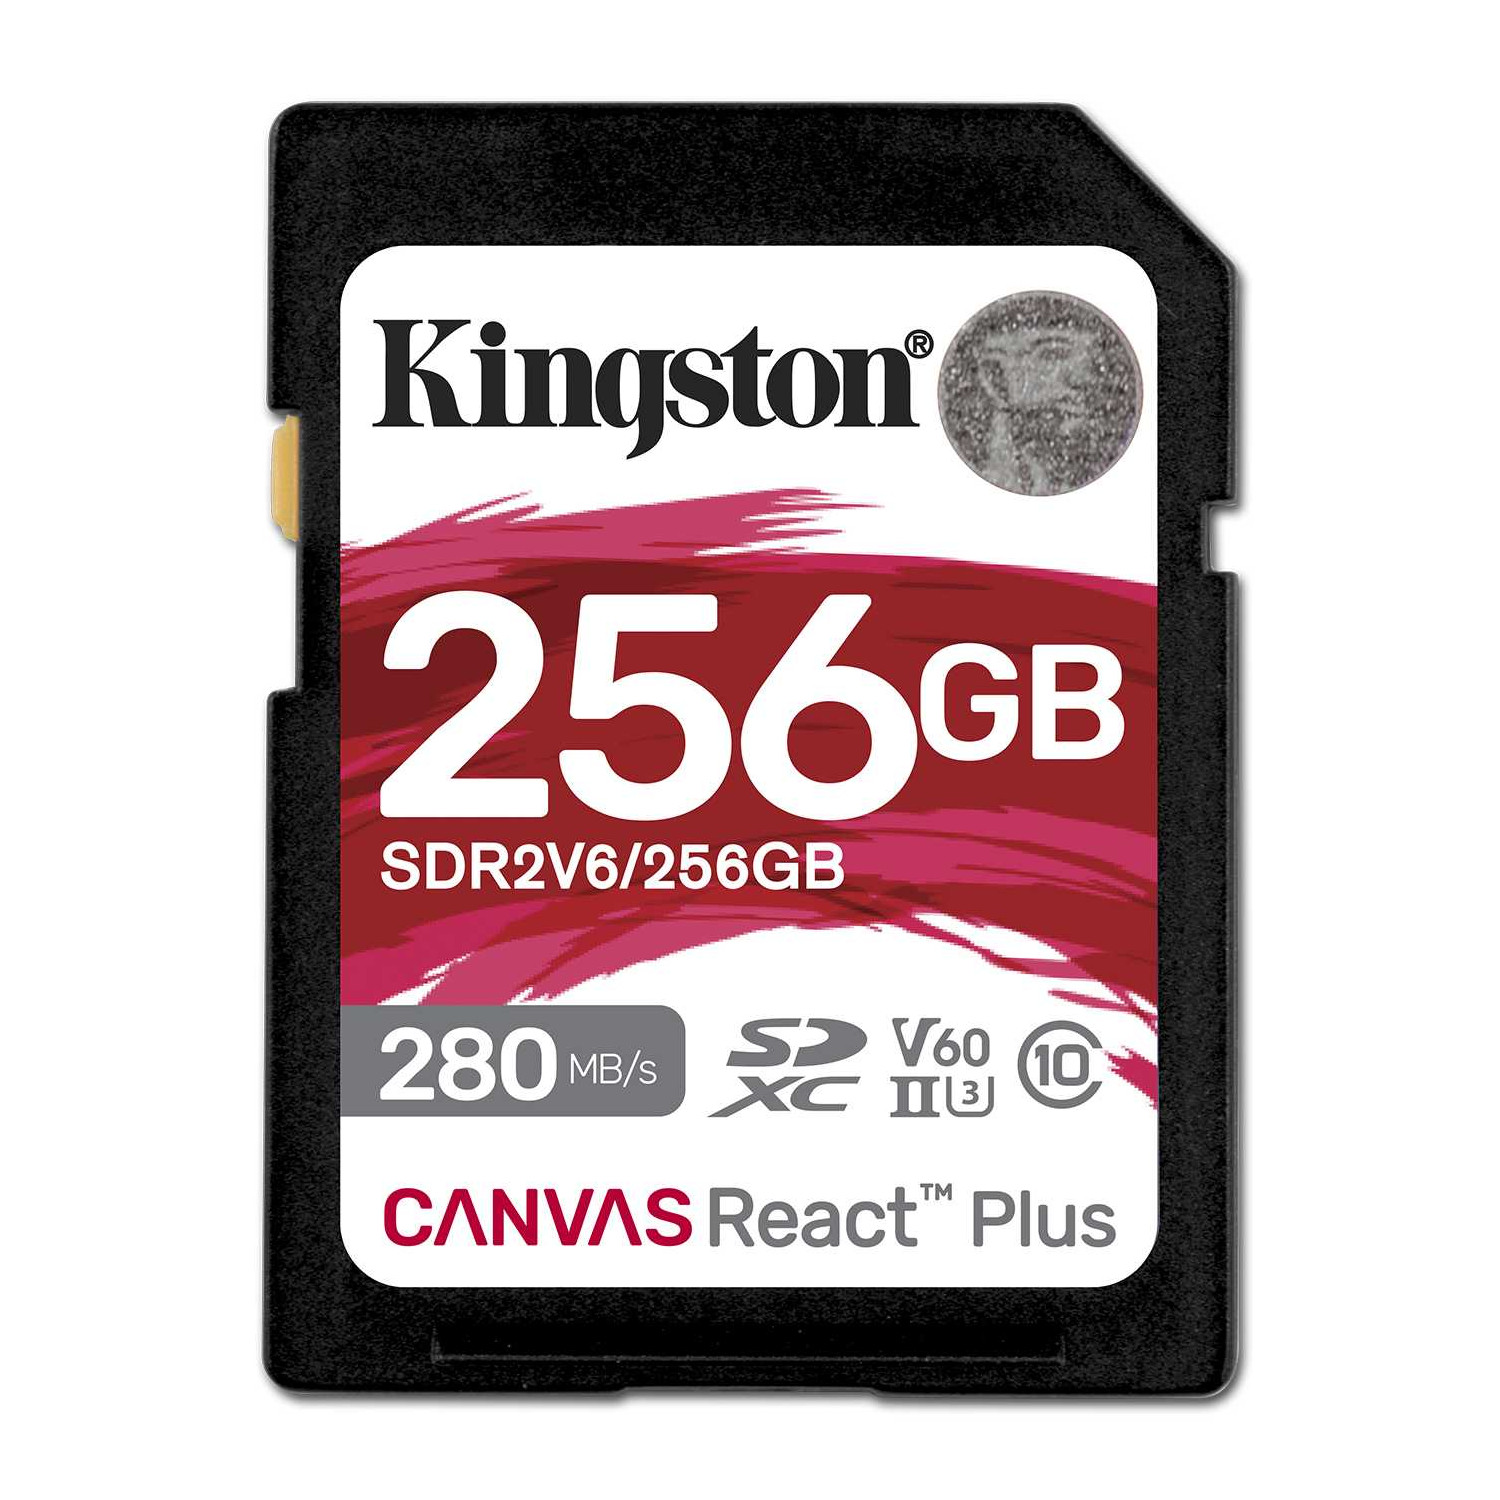 Kingston - SDR2V6-256GB -   